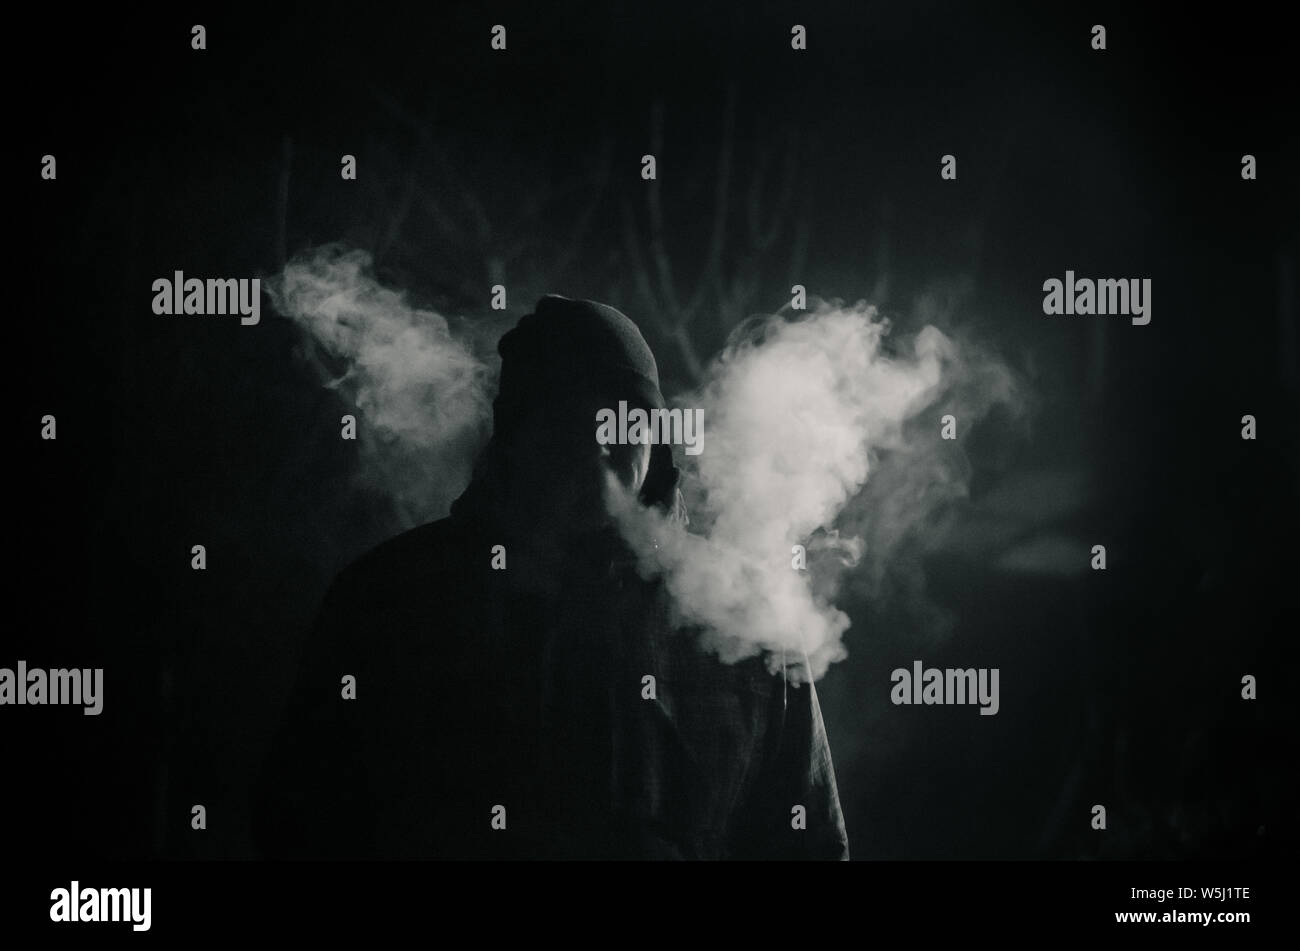 man silhouette smoking like chimney at night with backlight Stock Photo